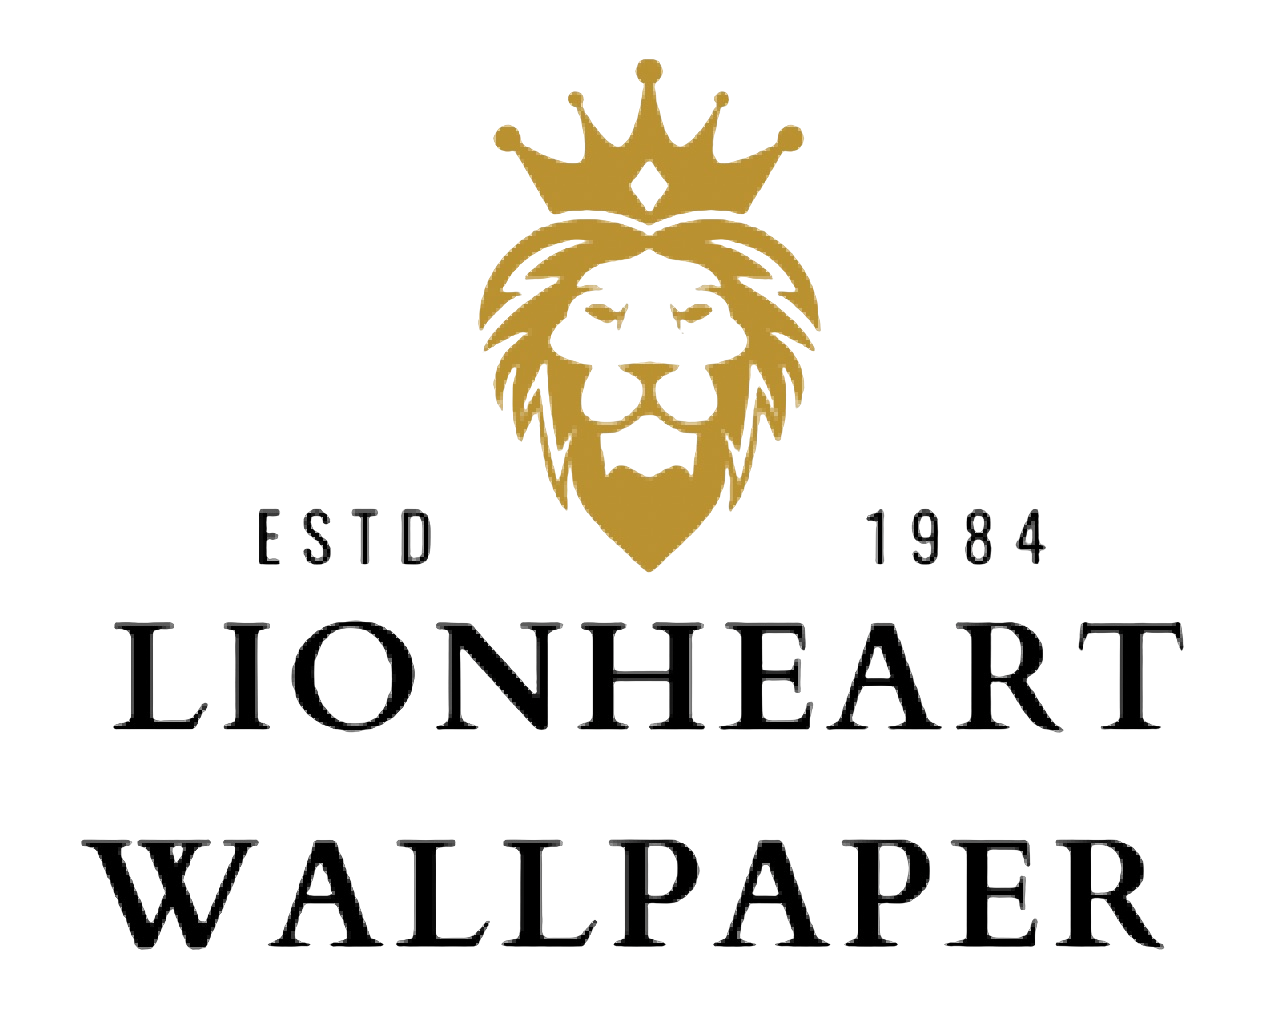 Sari Fabric – Lionheart Wallpaper